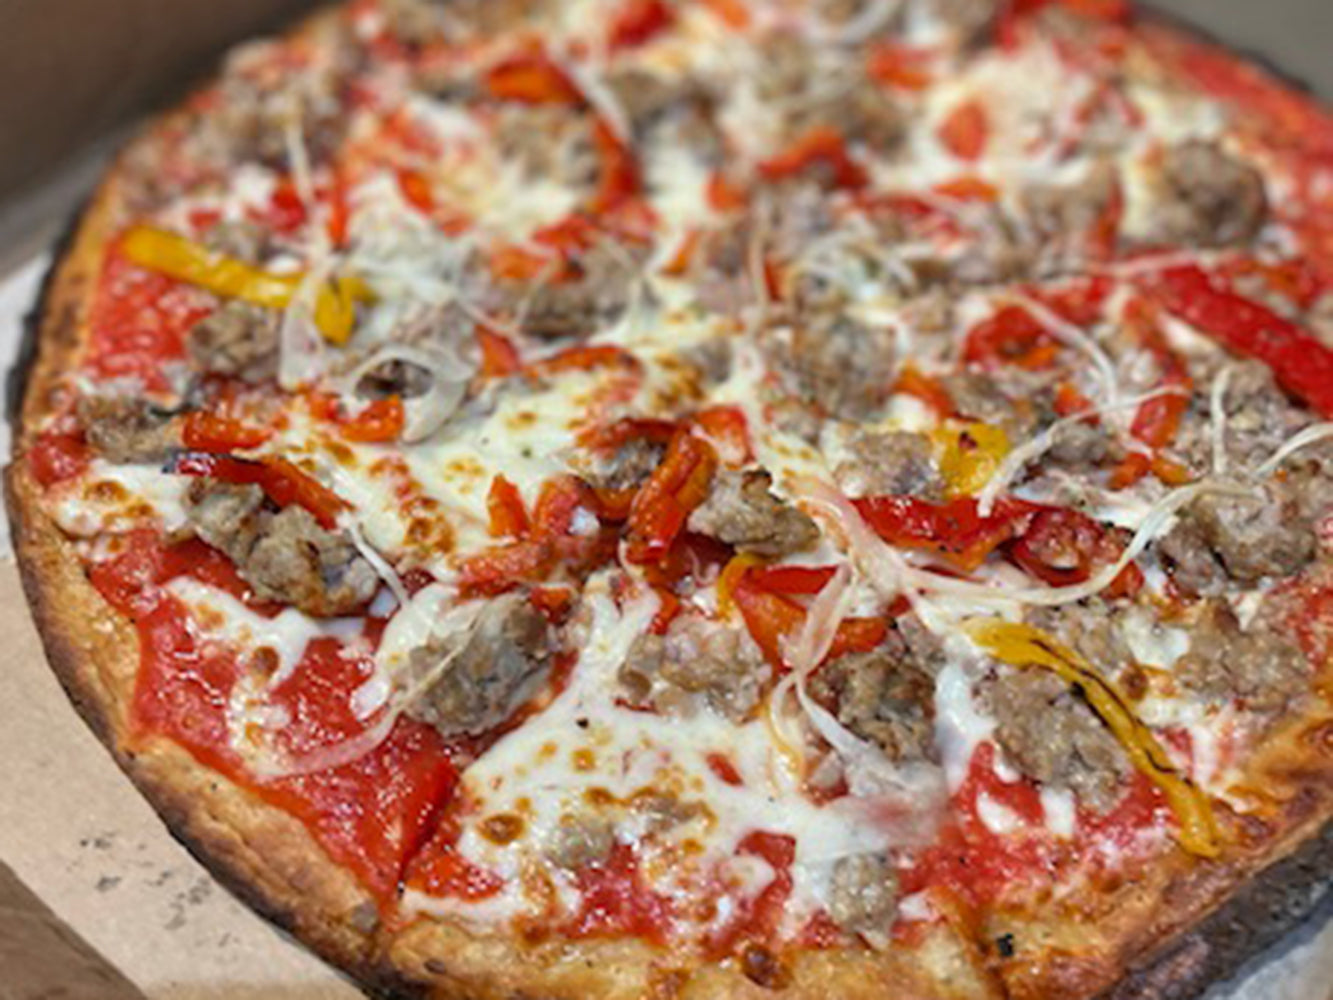 Still Riding Foods Gluten Free Pizza Crust (6 pack, 12 inch)